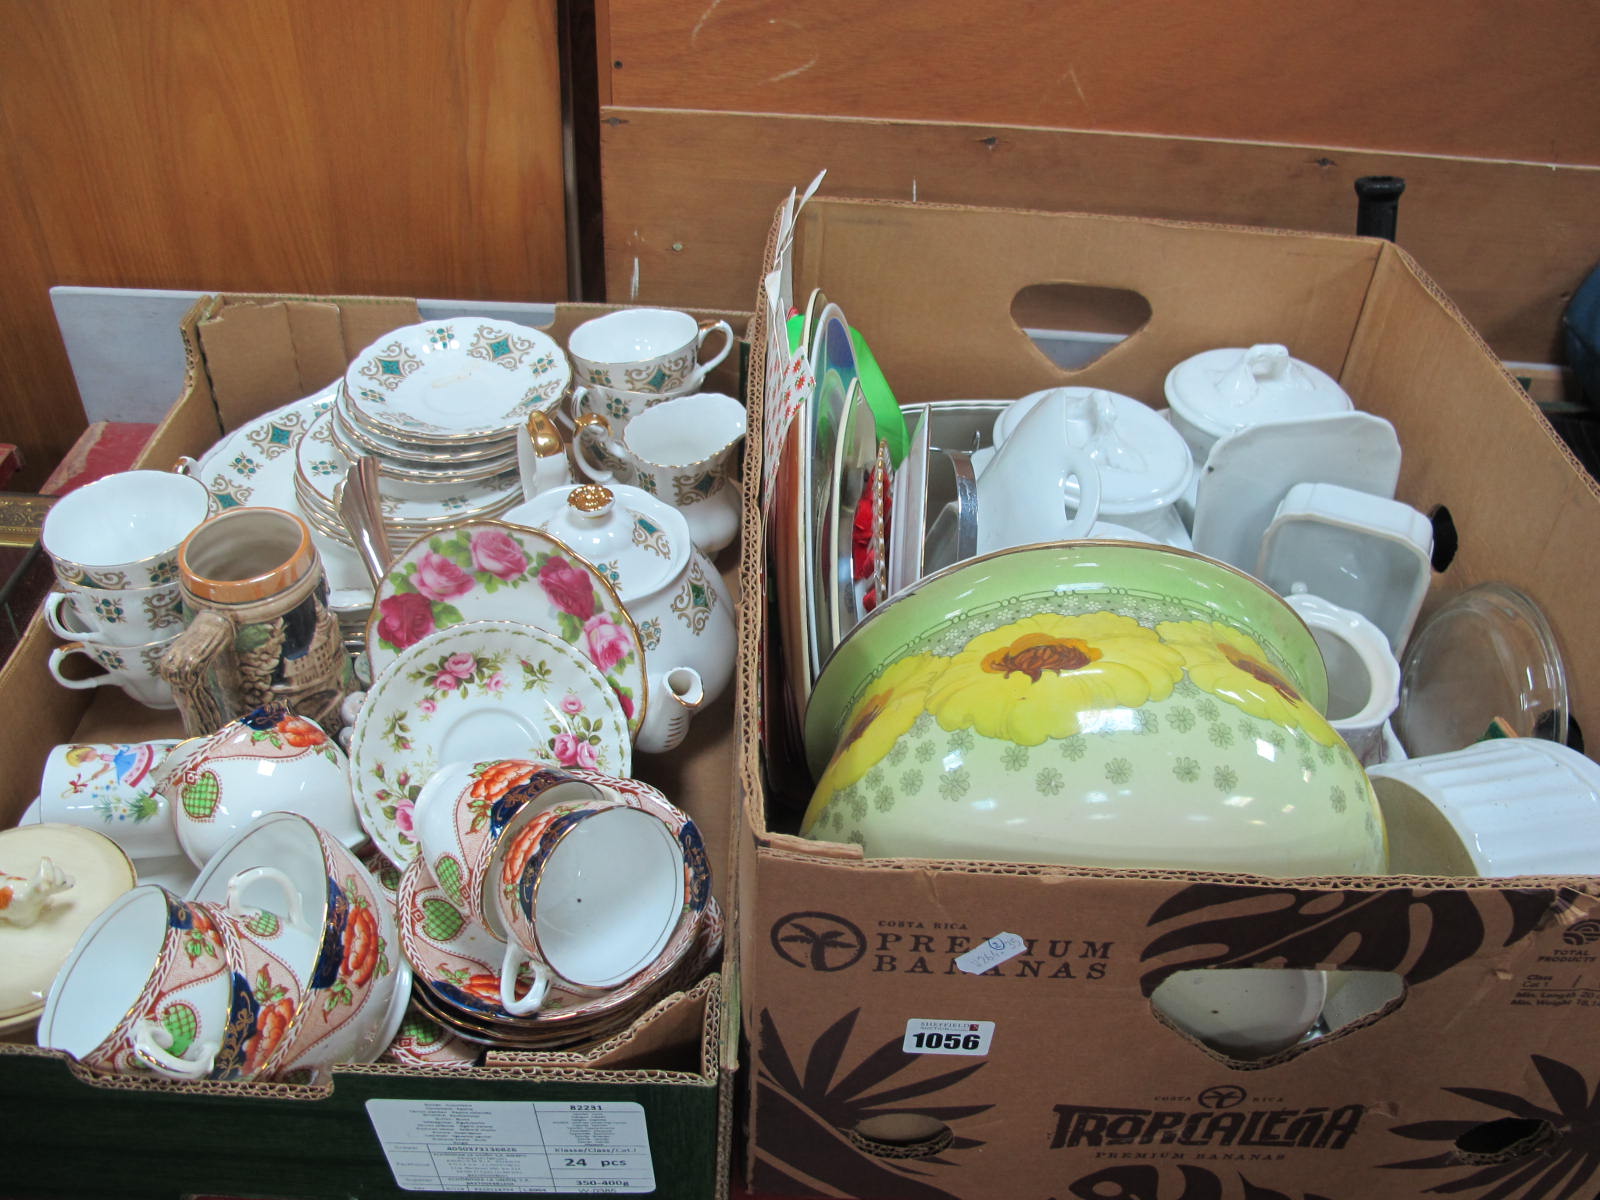 'Ivory' Chamber Pot, Le Vrai kitchen jars, tea ware, etc:- Two Boxes.